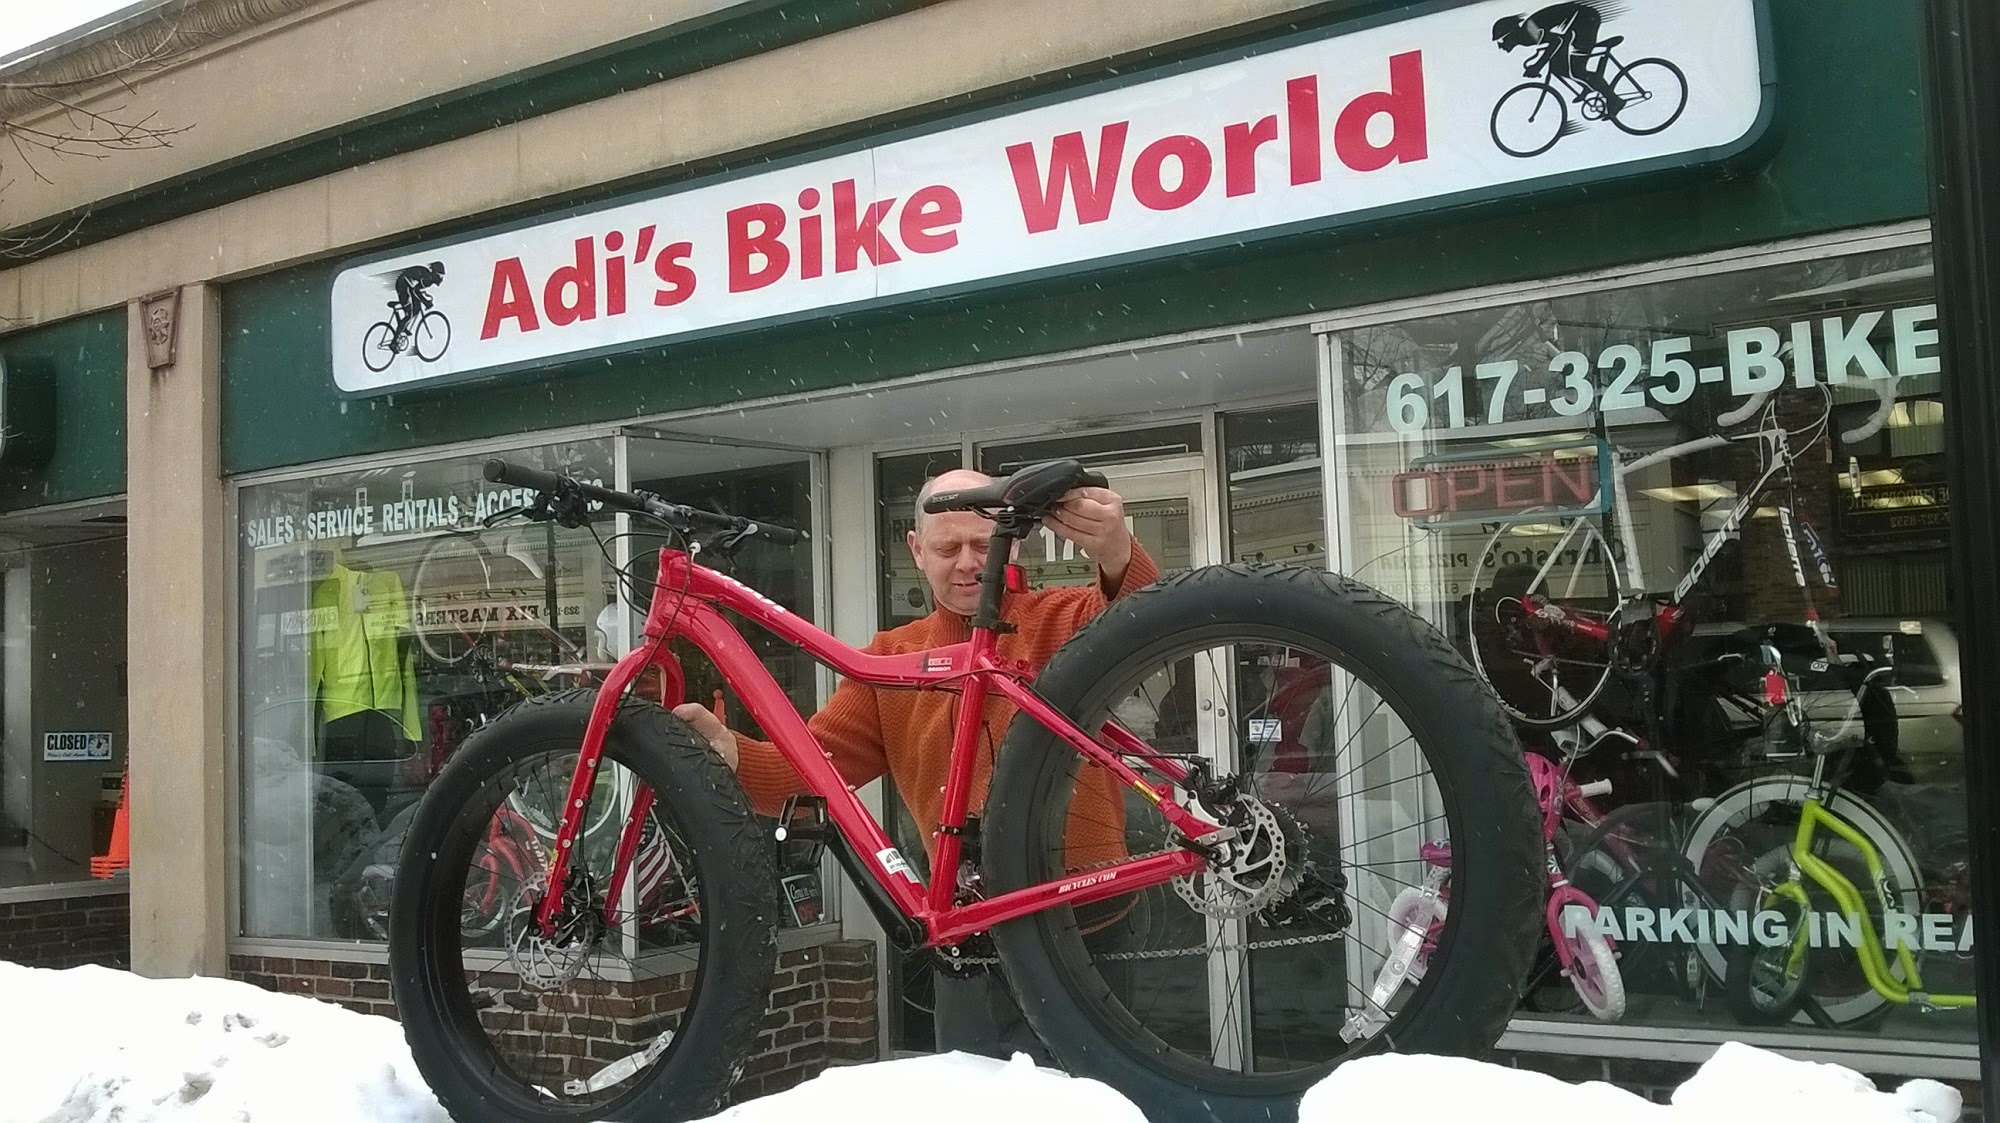 Adi's Bike World